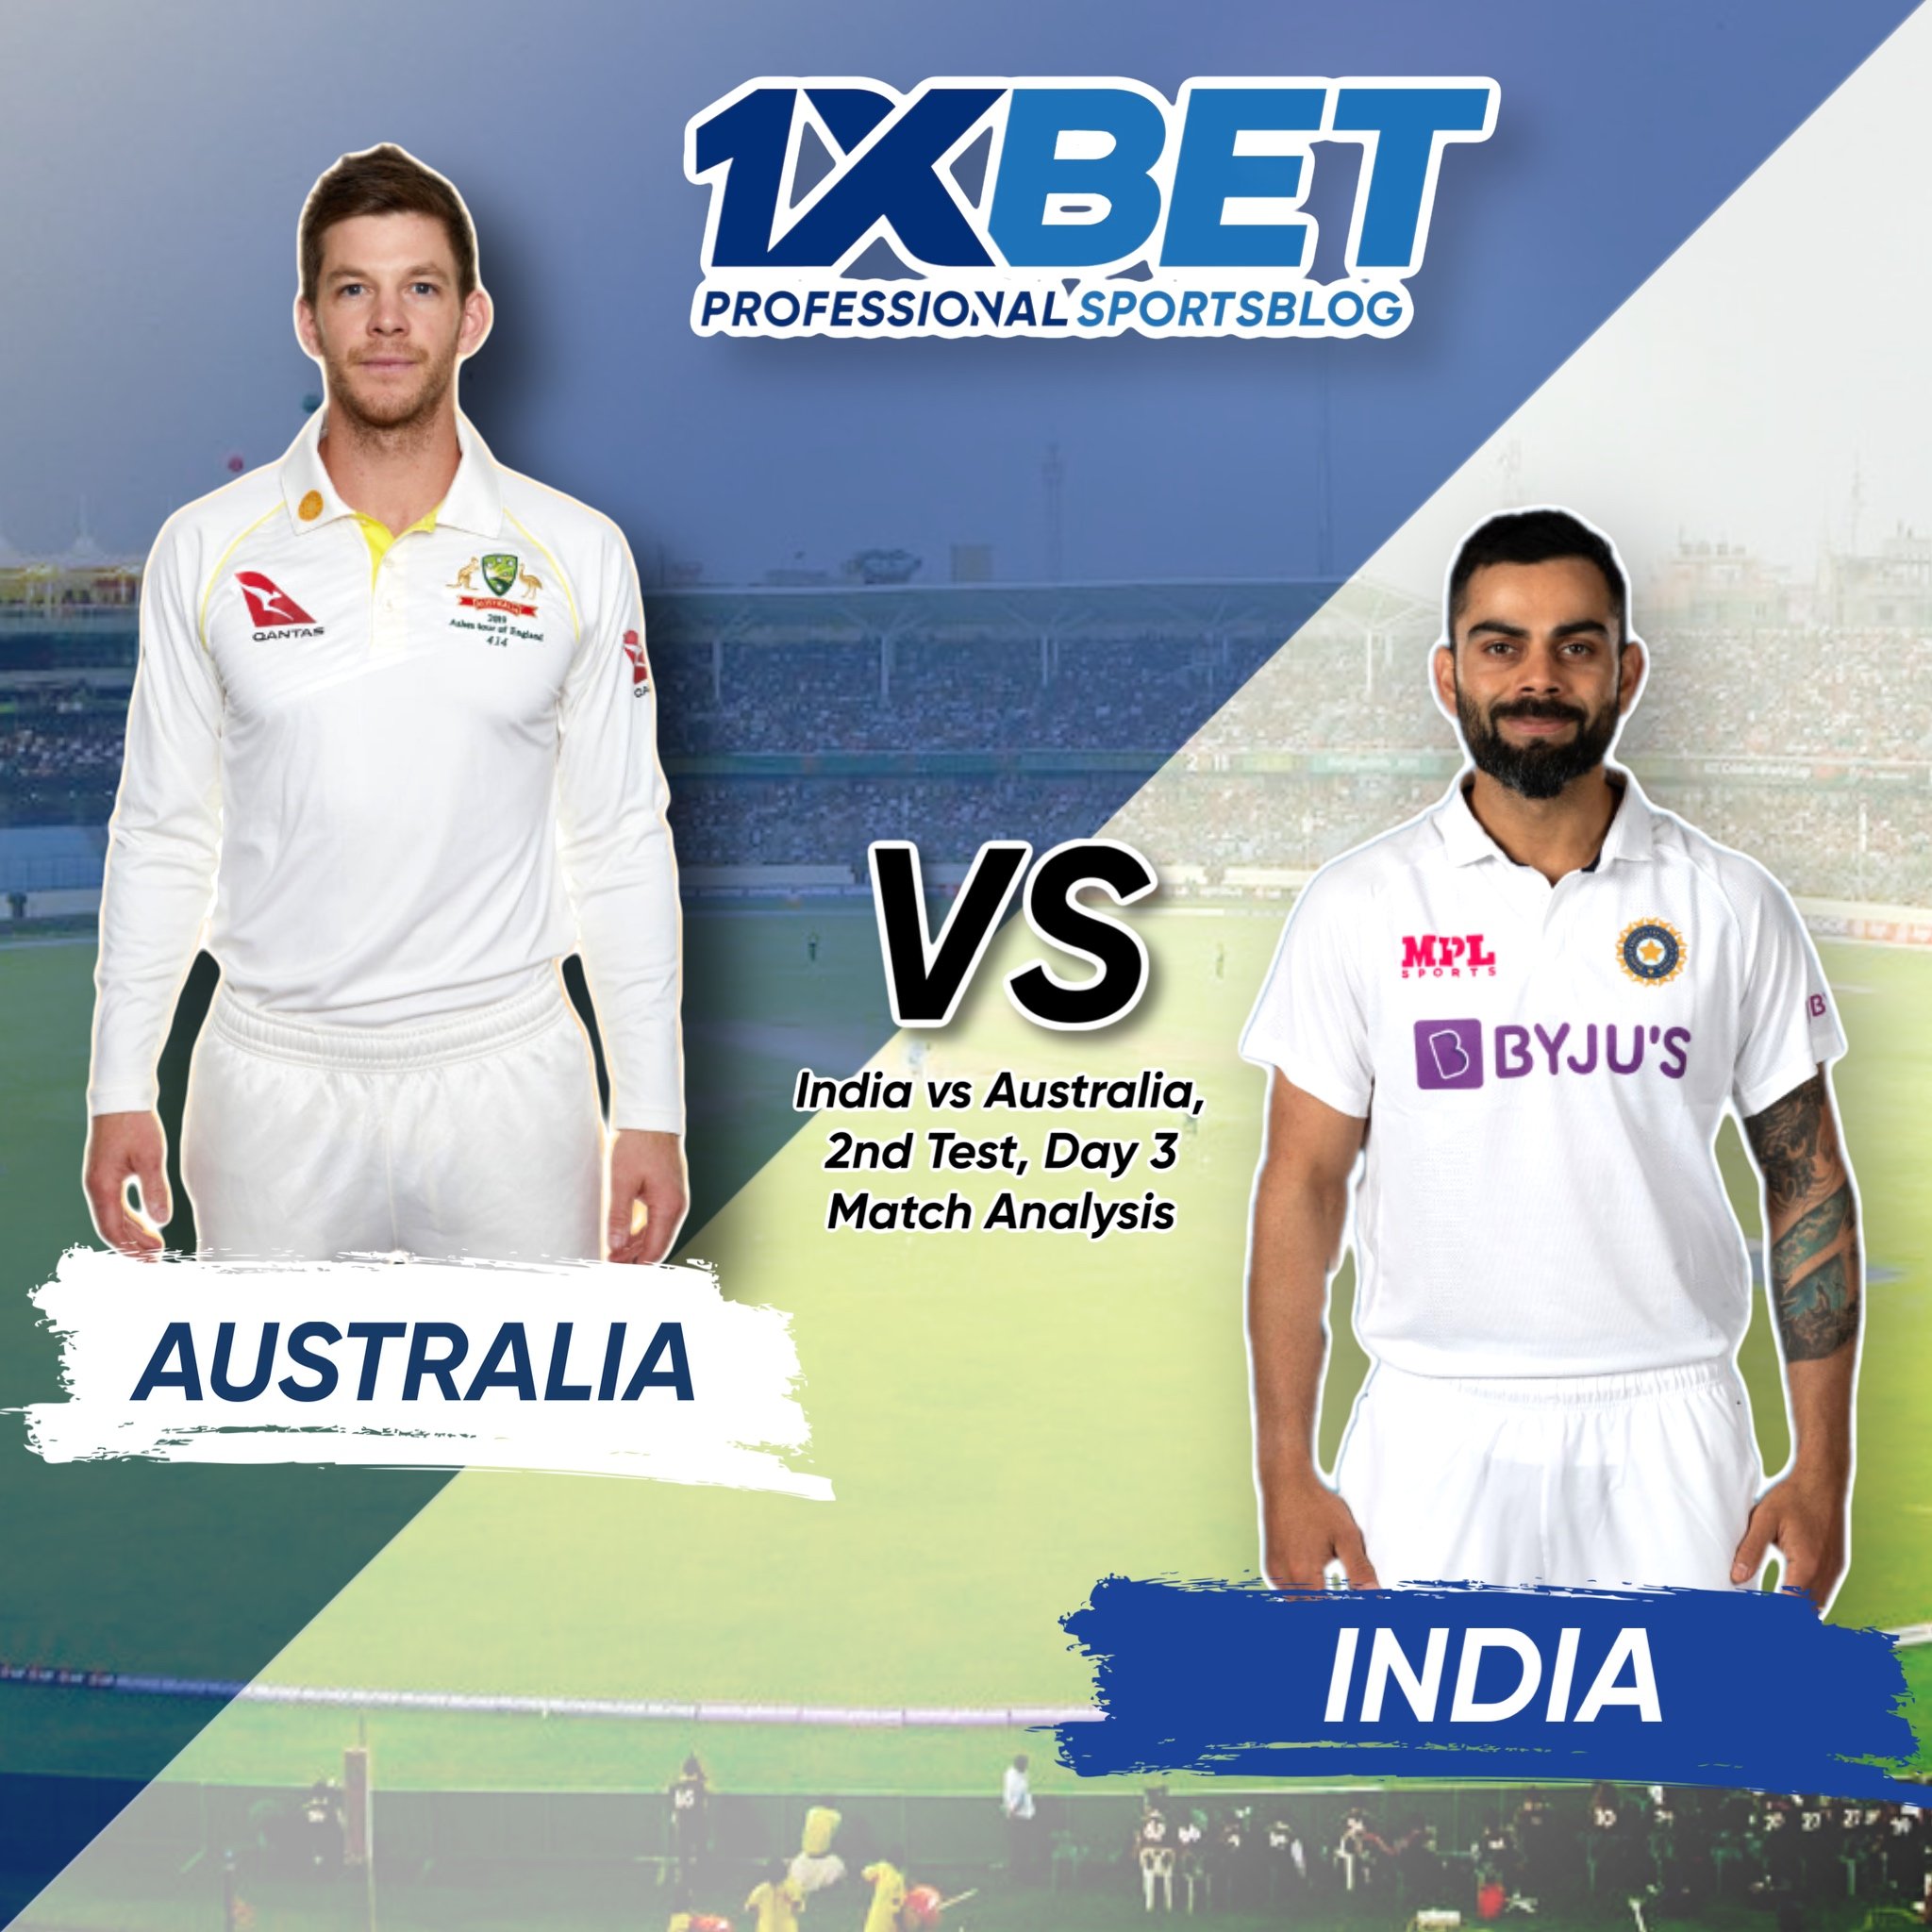 India vs Australia, 2nd Test, Day 3 Match Analysis